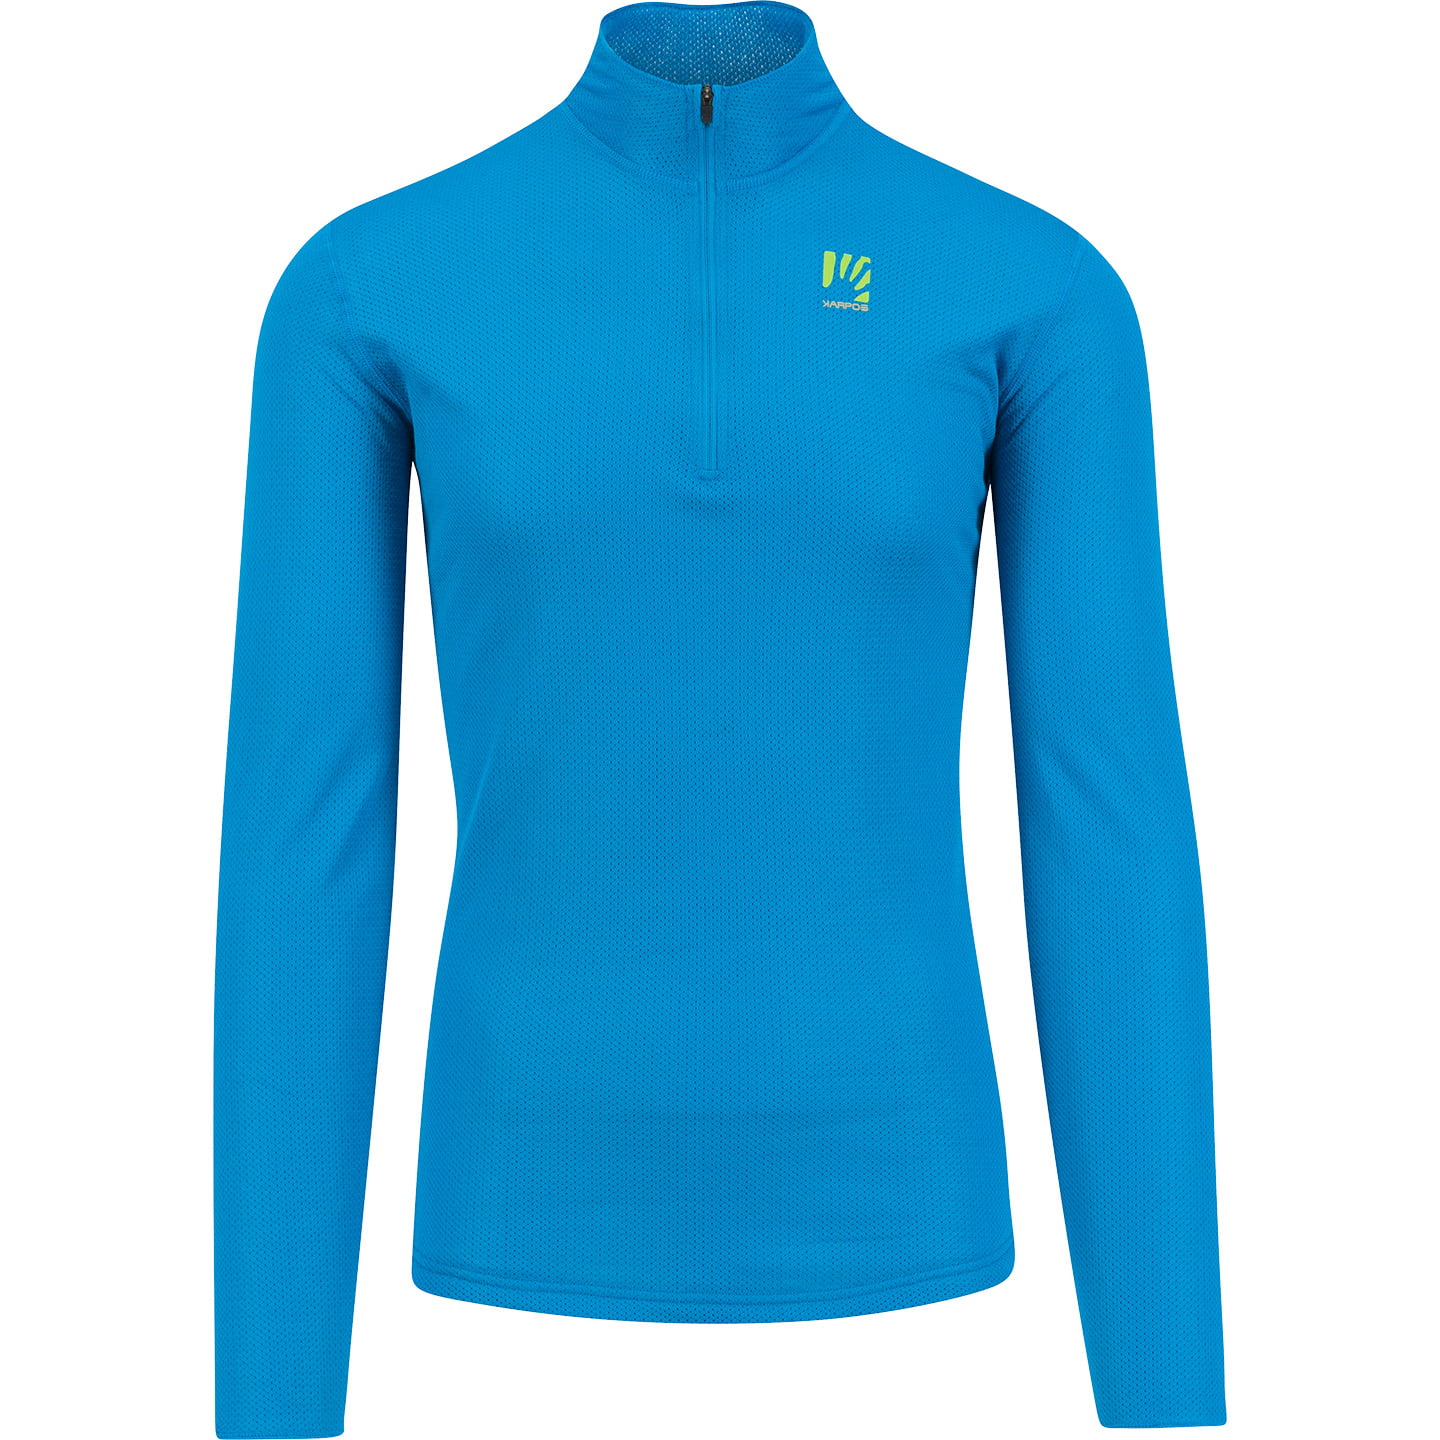 KARPOS Alagna Long Sleeve Jersey Bikeshirt, for men, size M, Cycling jersey, Cycling clothing